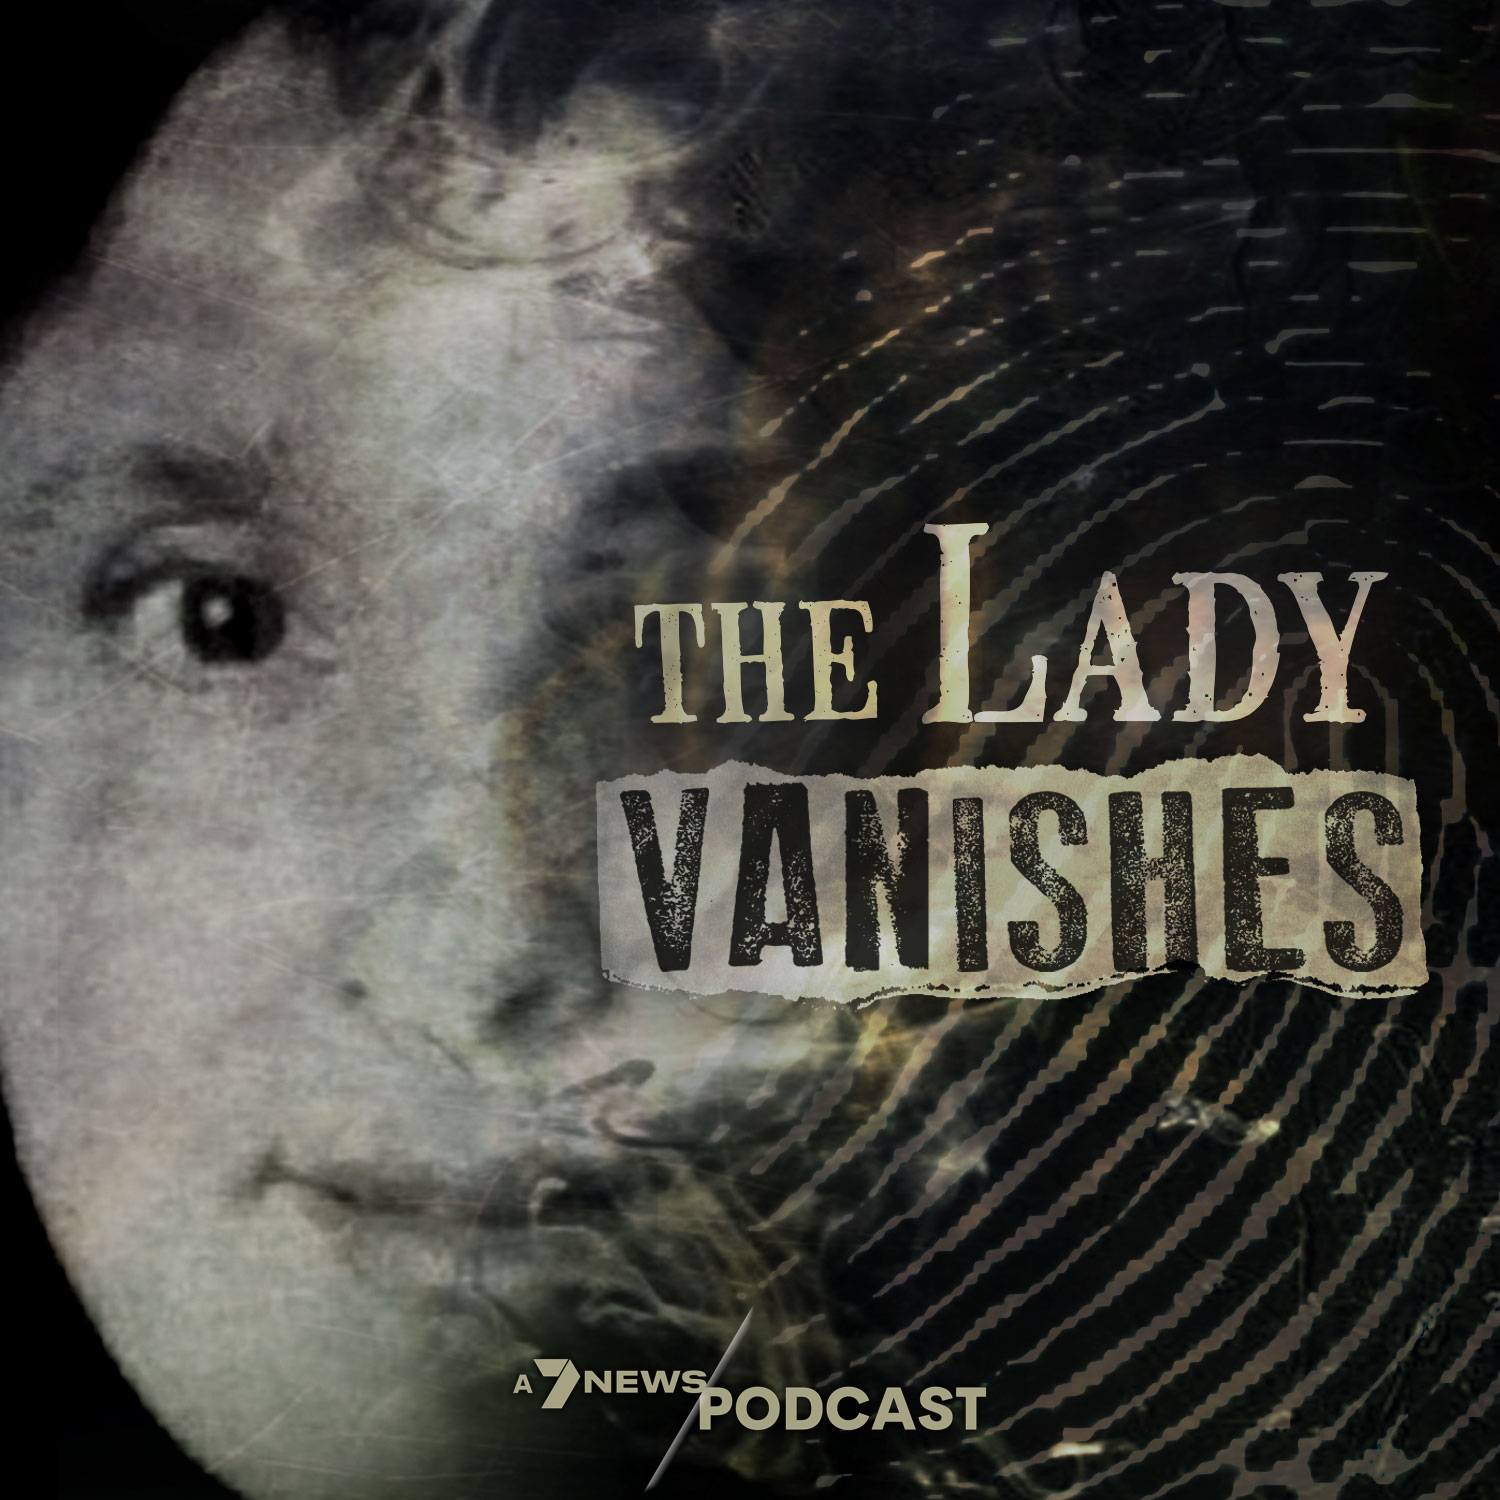 The Lady Vanishes podcast show image